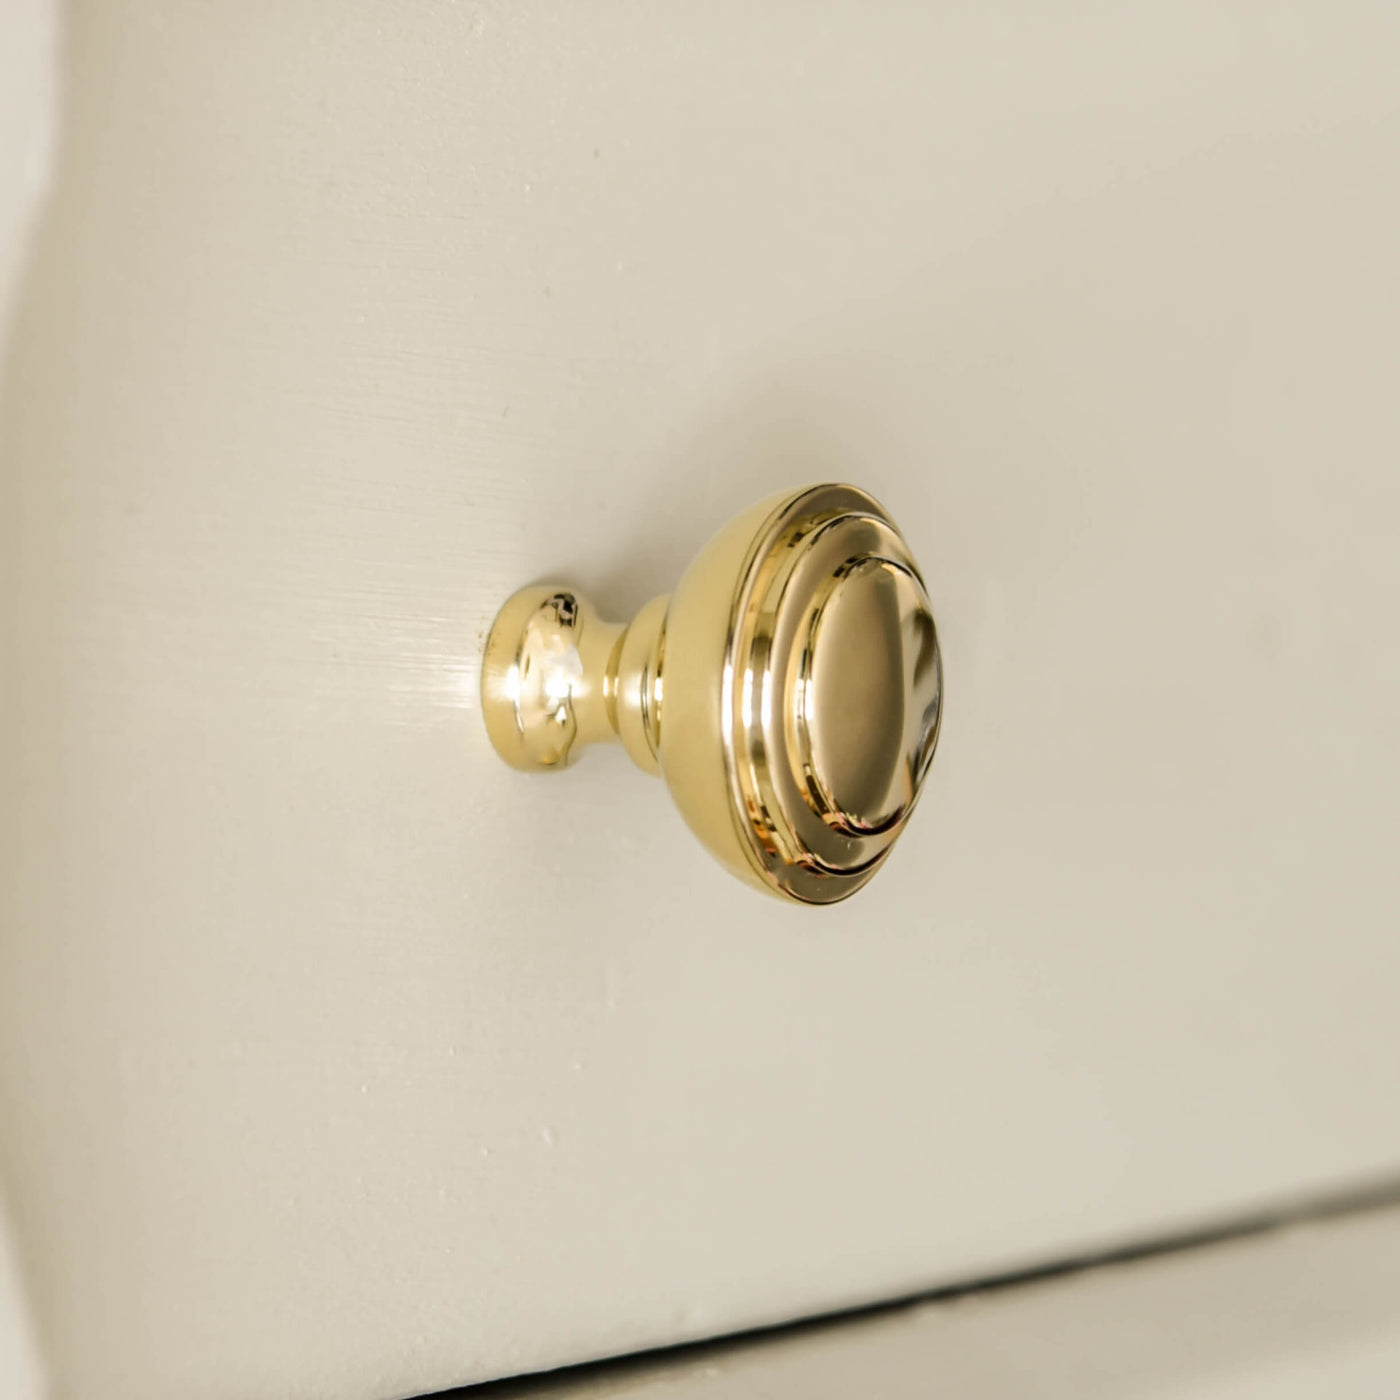 Oval Brass Cabinet Knob